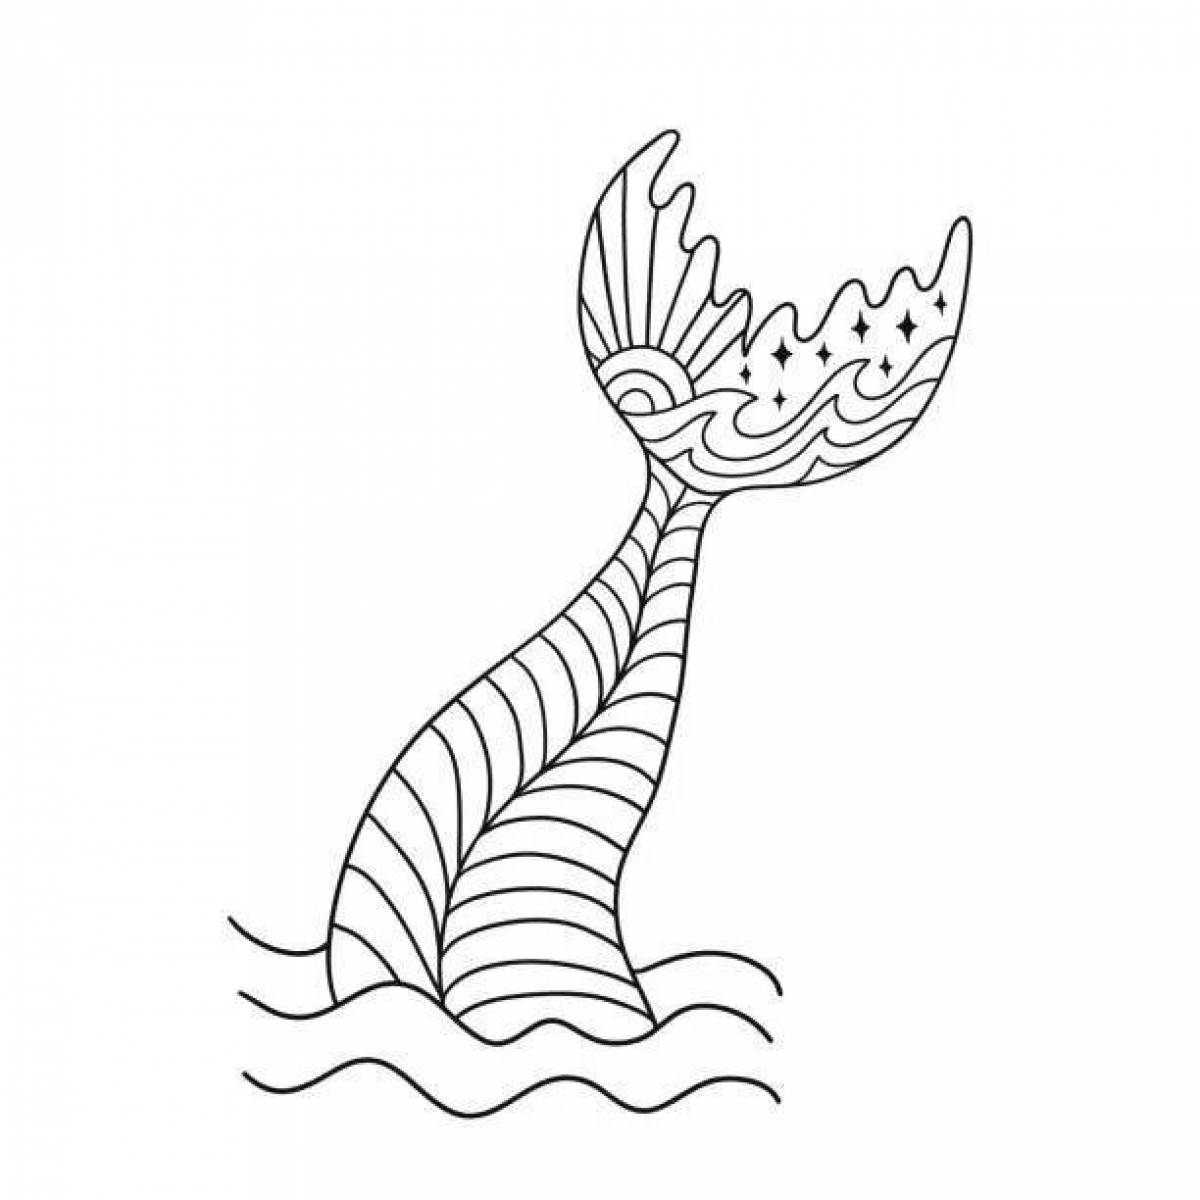 Glorious mermaid tail coloring